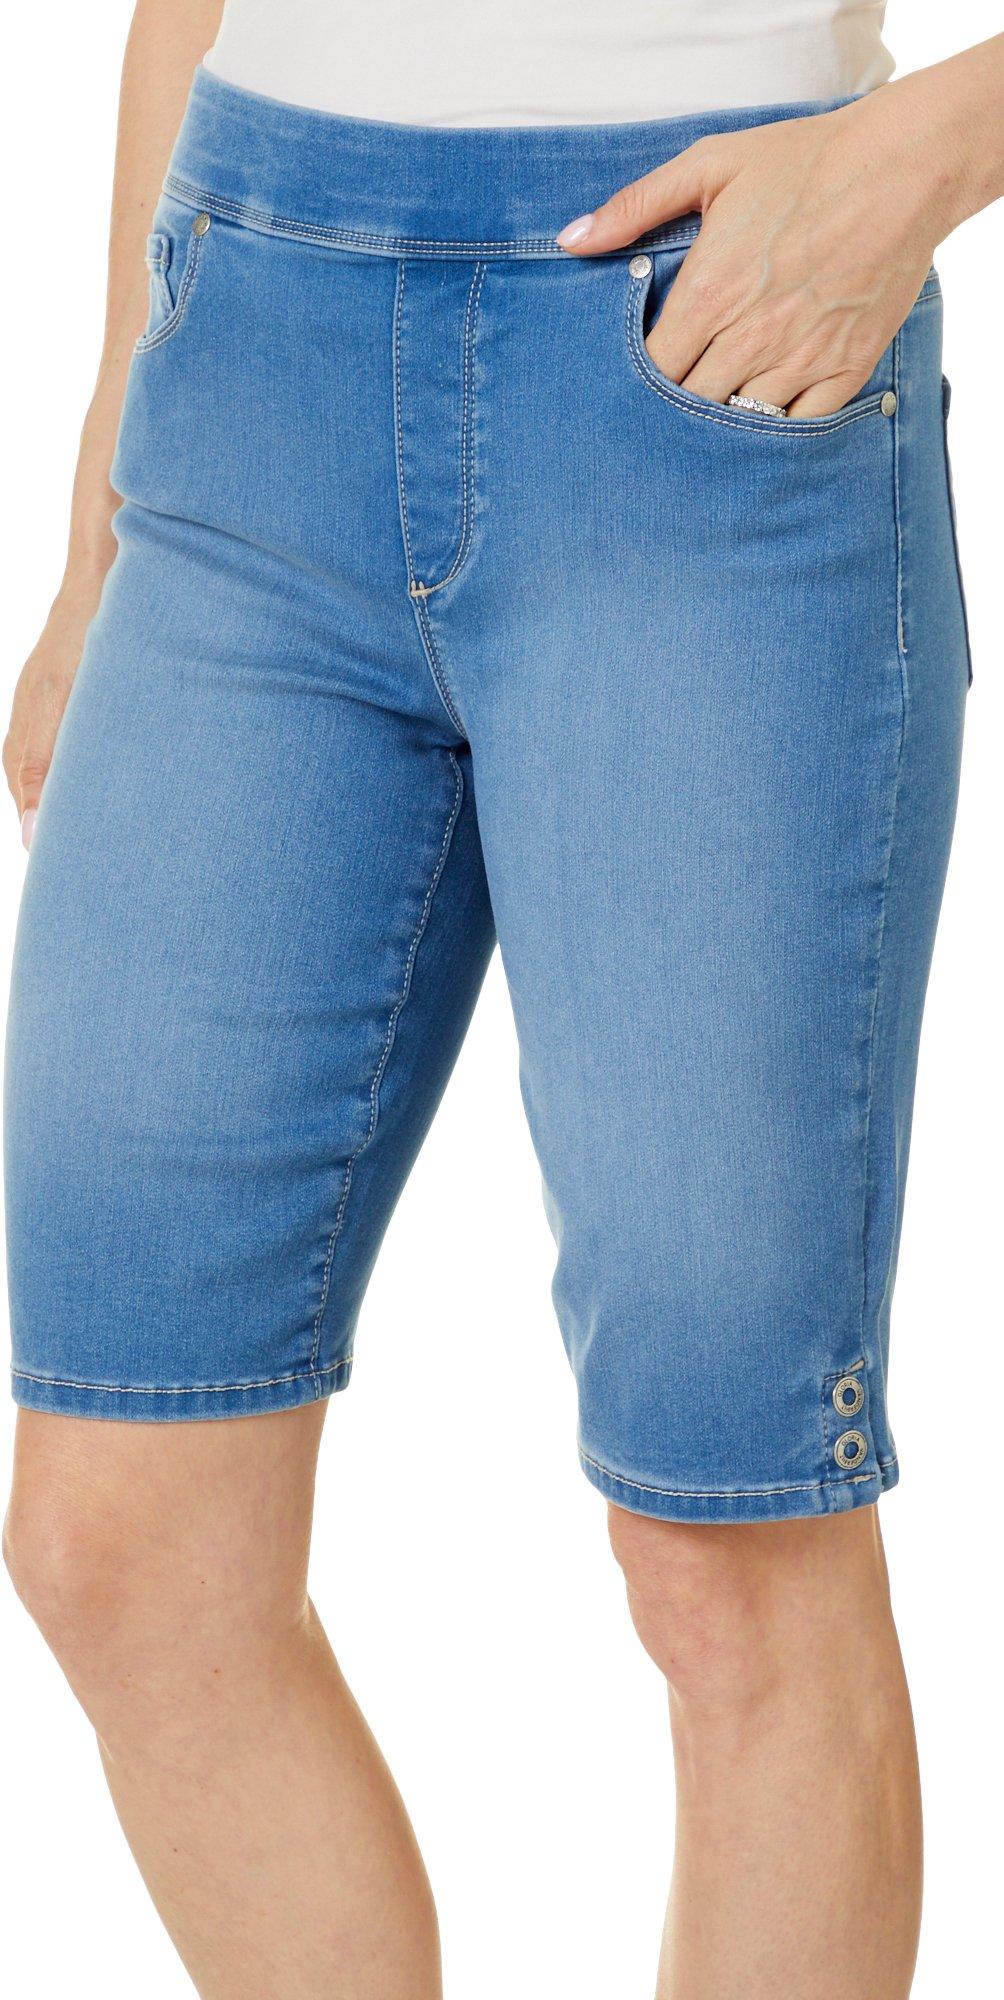 Buy > gloria vanderbilt all around slimming shorts > in stock